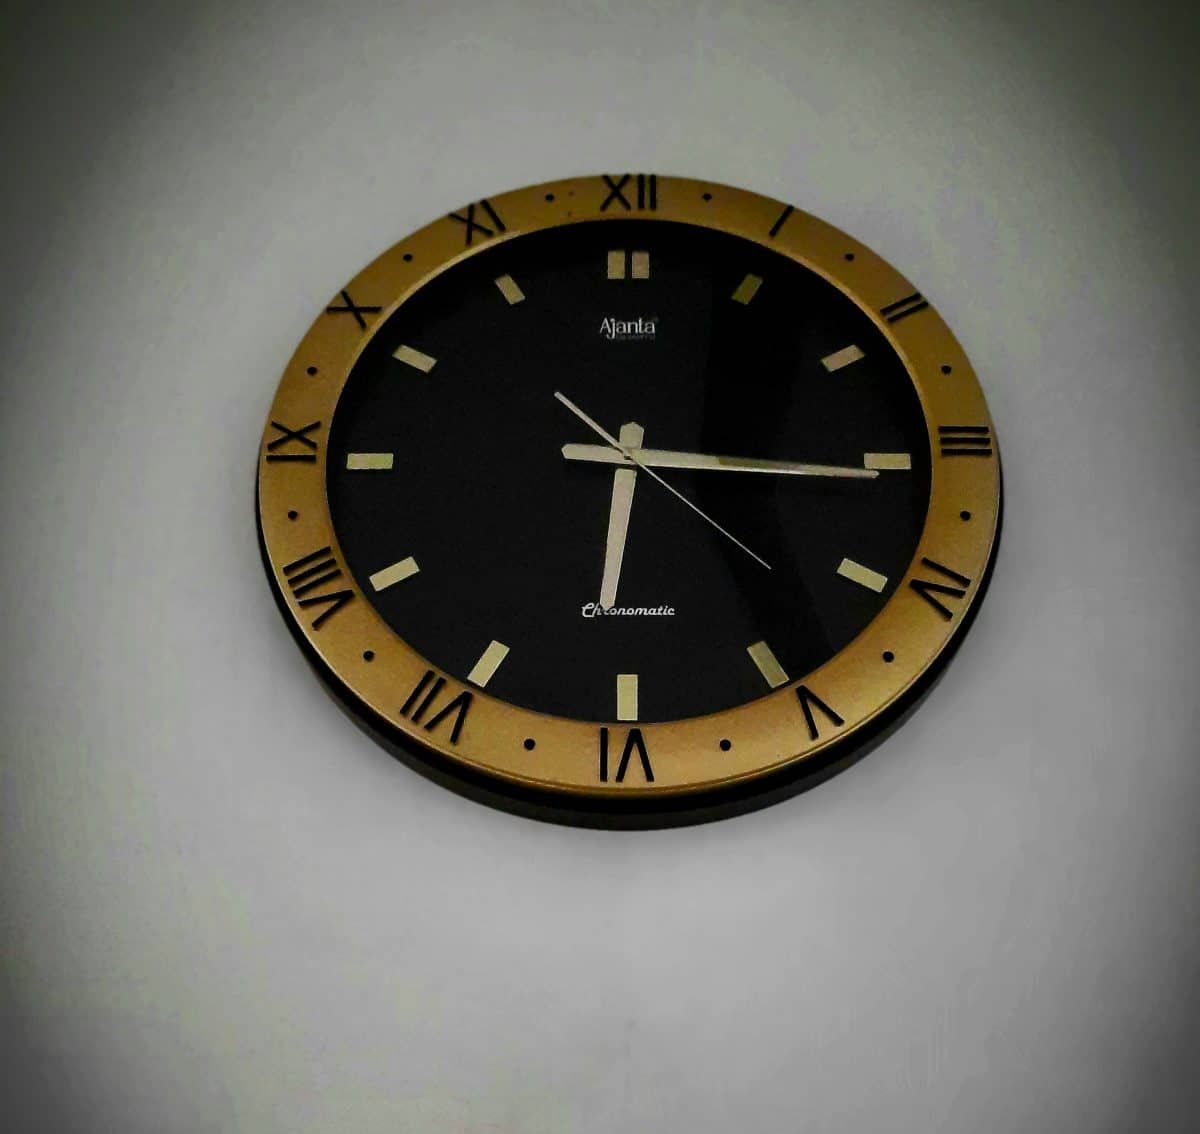 The mystery of my clocks 1